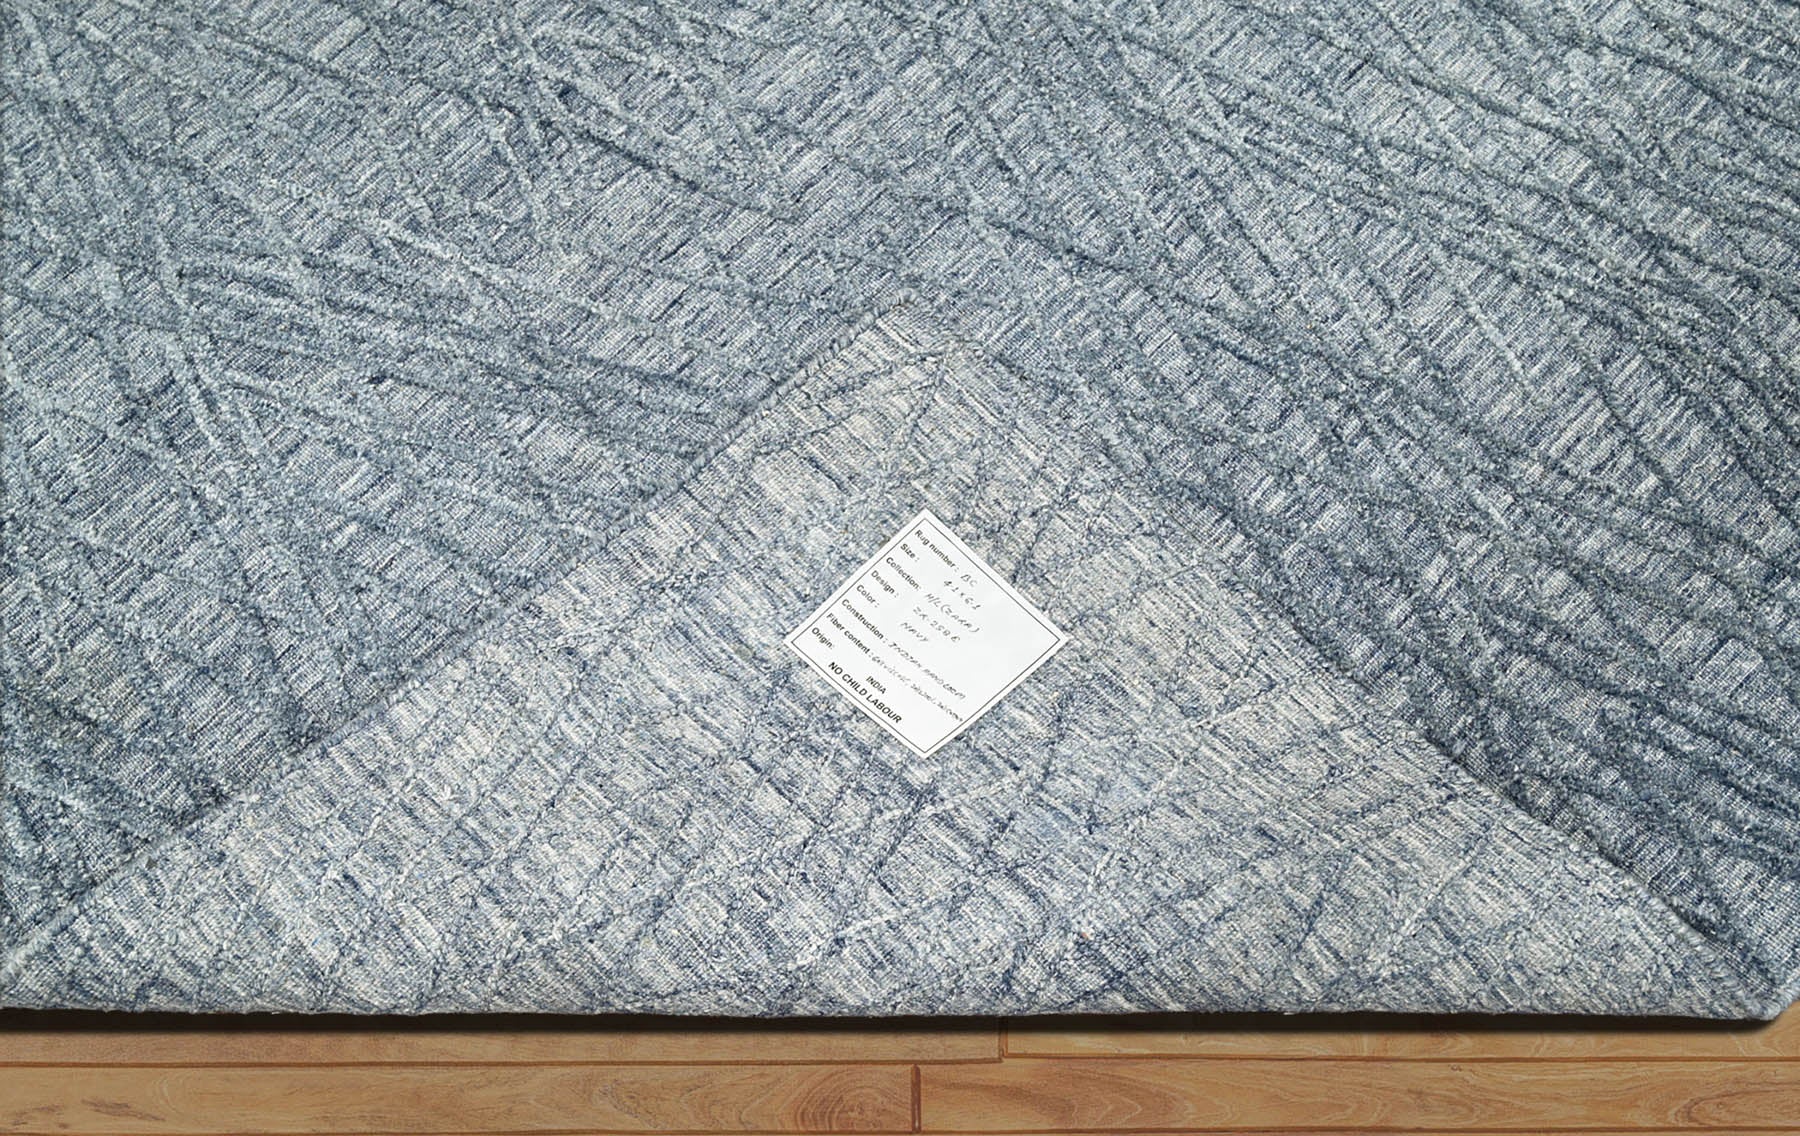 Kamar 4x6  Blue LoomBloom Hand Knotted Modern & Contemporary Textured Tibetan 100% Wool Oriental Area Rug